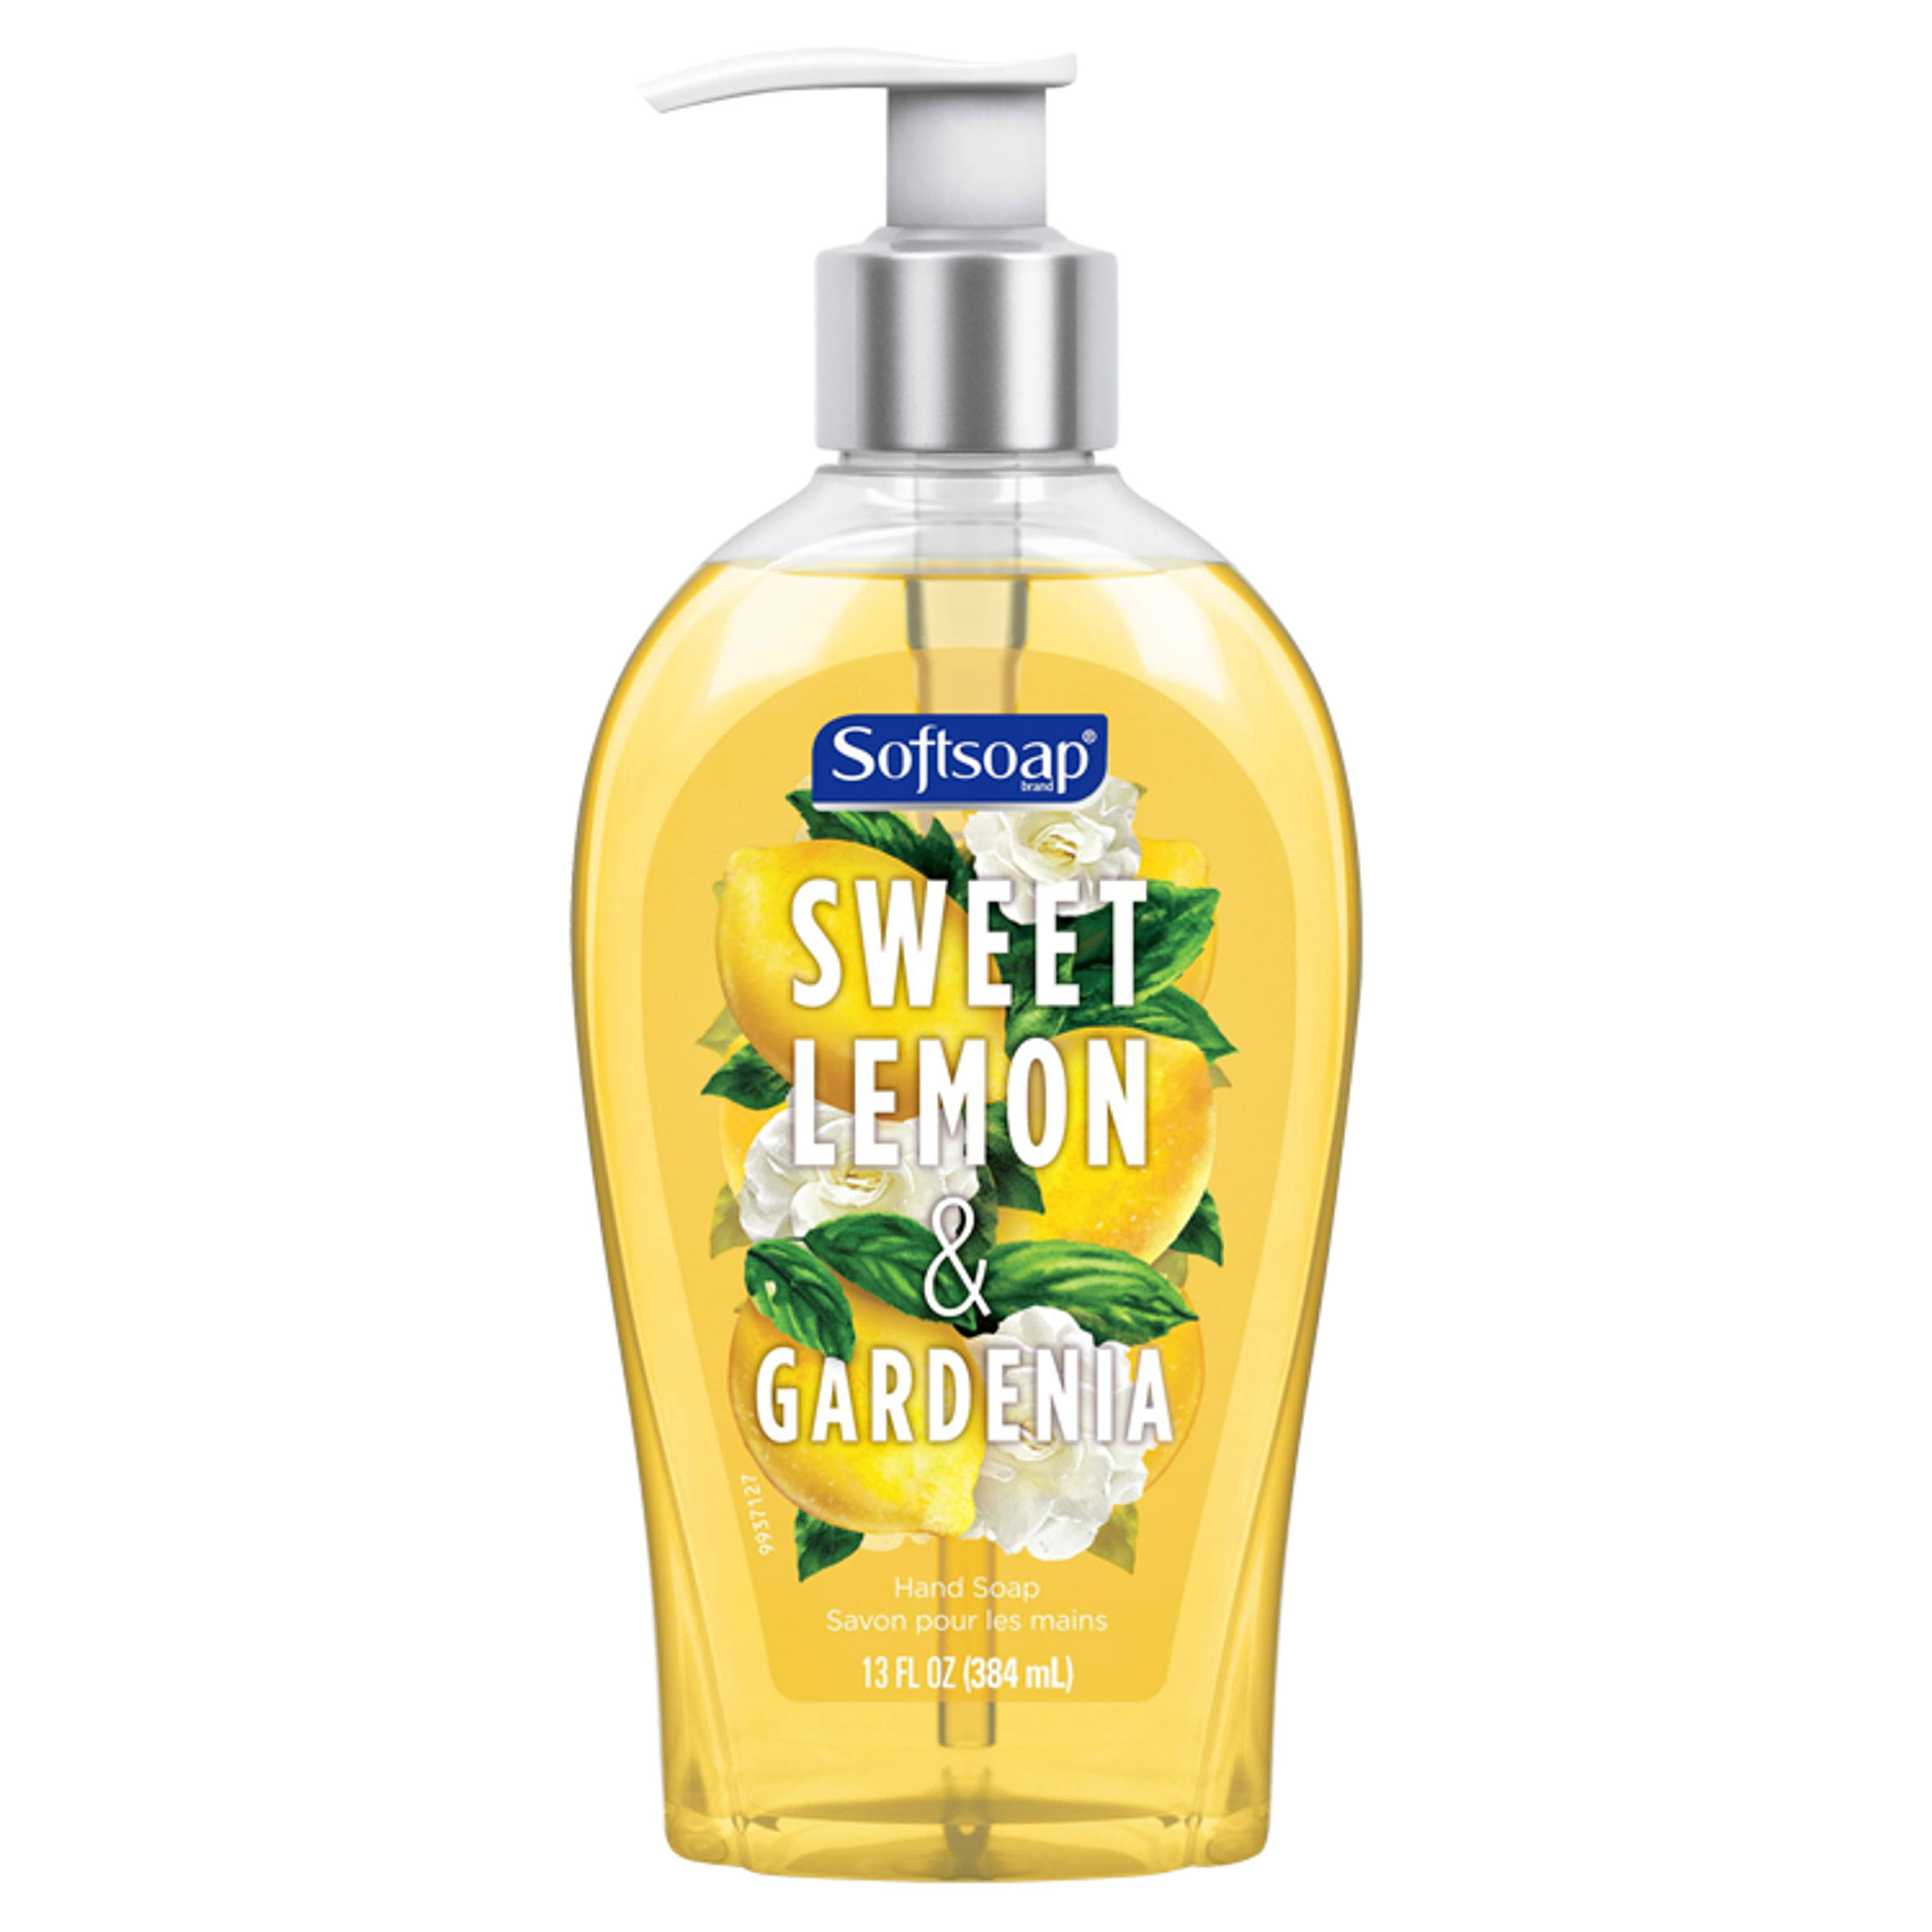 Softsoap Sweet Lemon & Gardenia 2 Pack, 13 FL oz